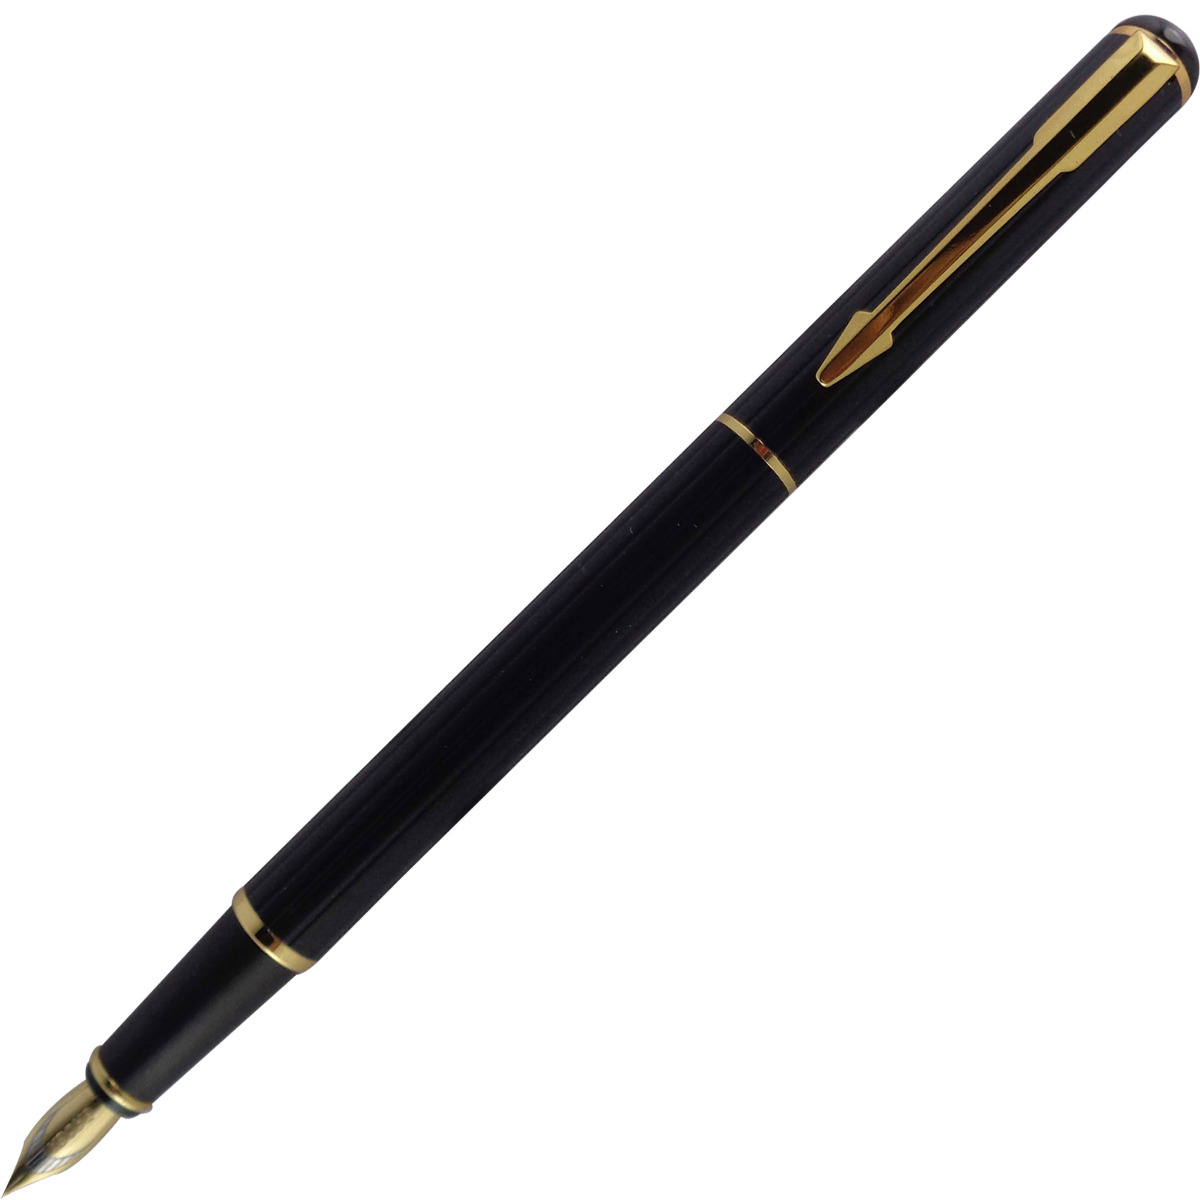 Baoer Model: 13819 Black color stripped body with golden clip cap type medium Nib fountain pen